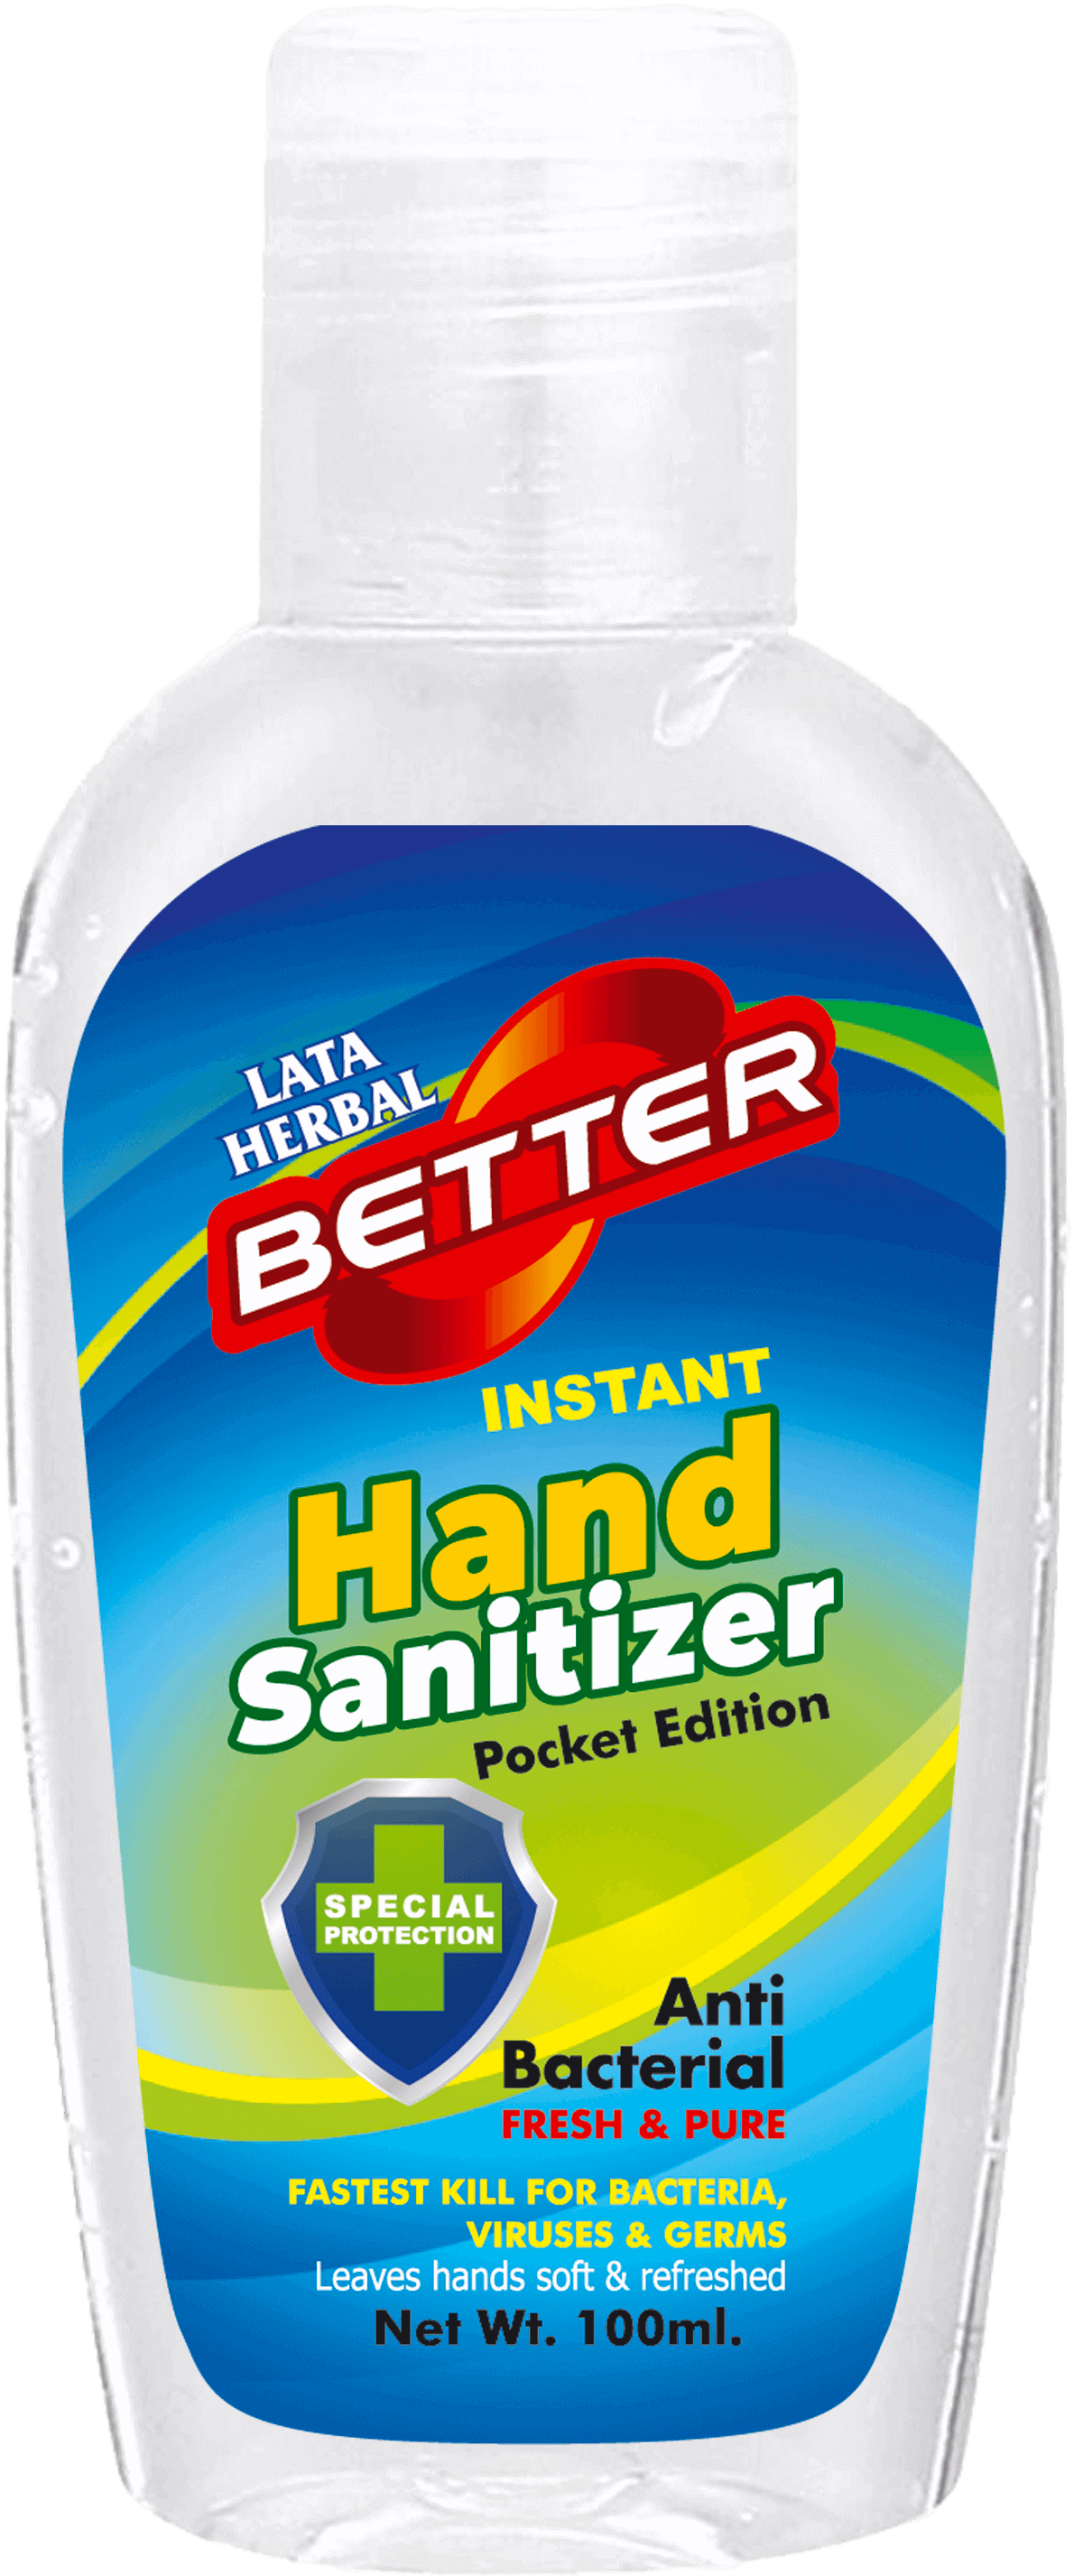 Better Pocket Hand Sanitizer